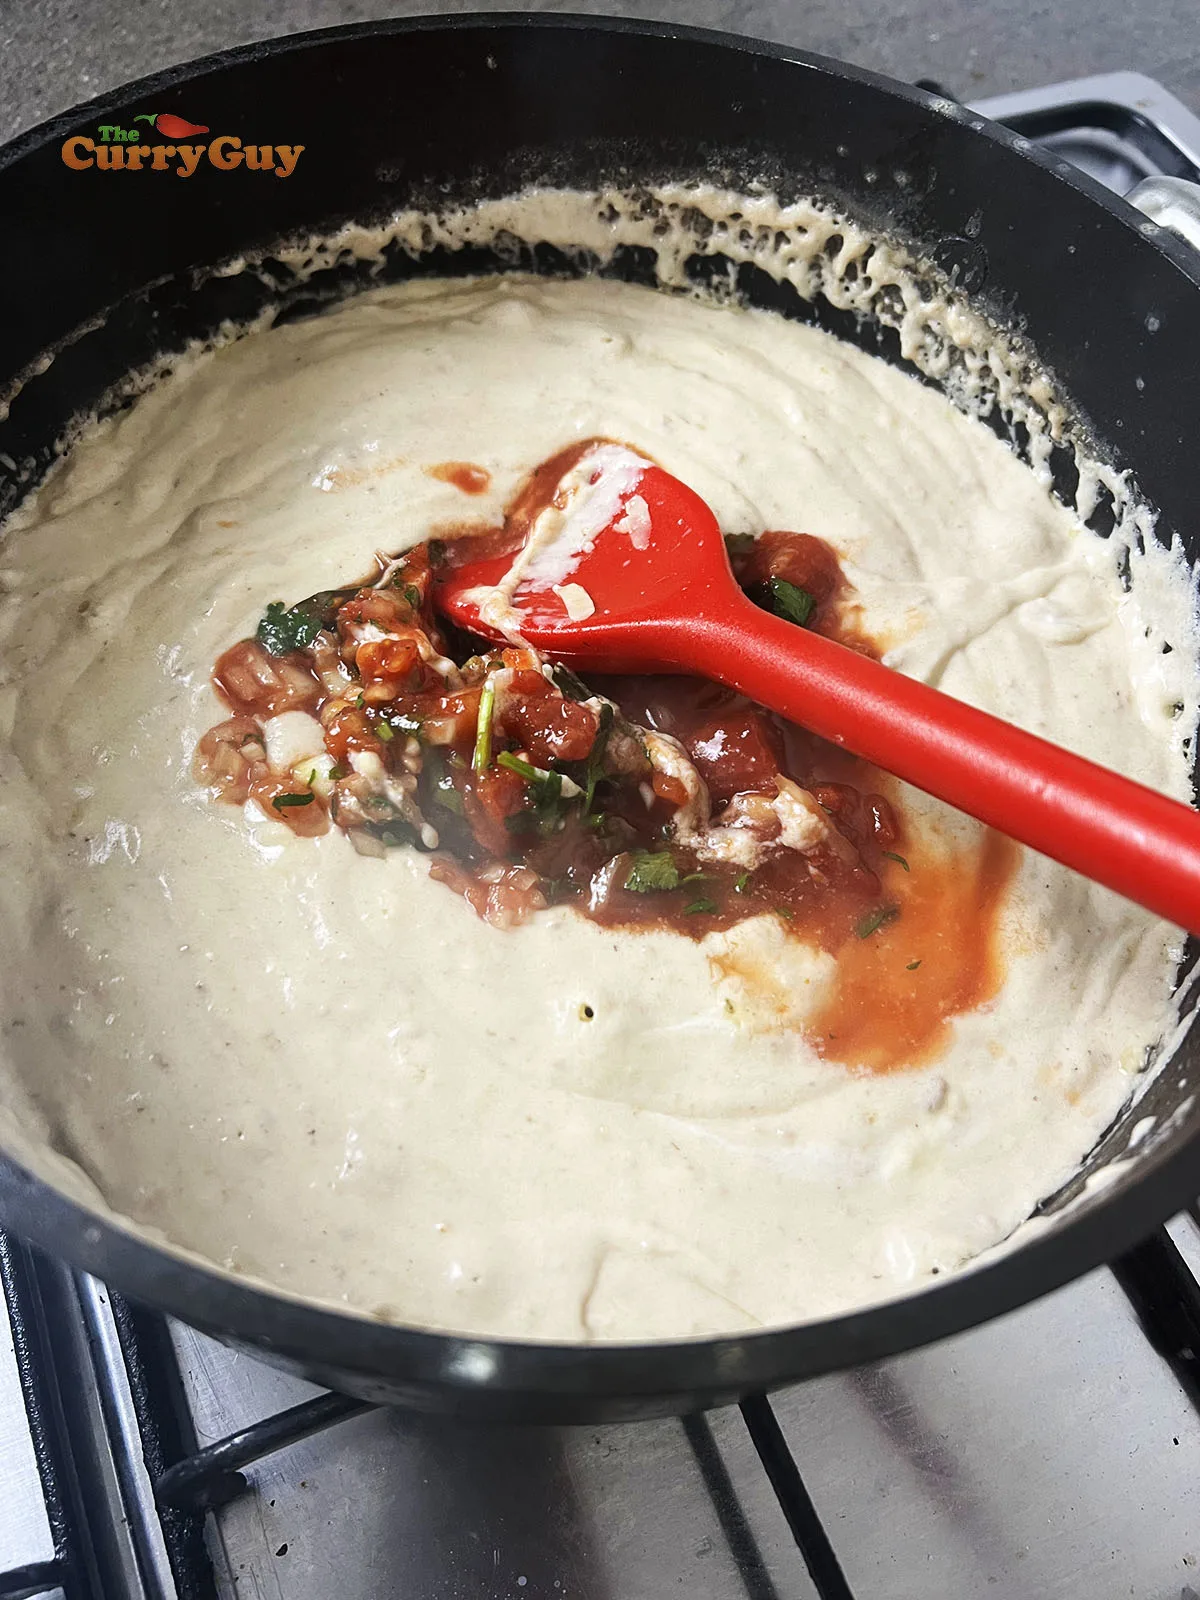 Adding salsa to the sauce